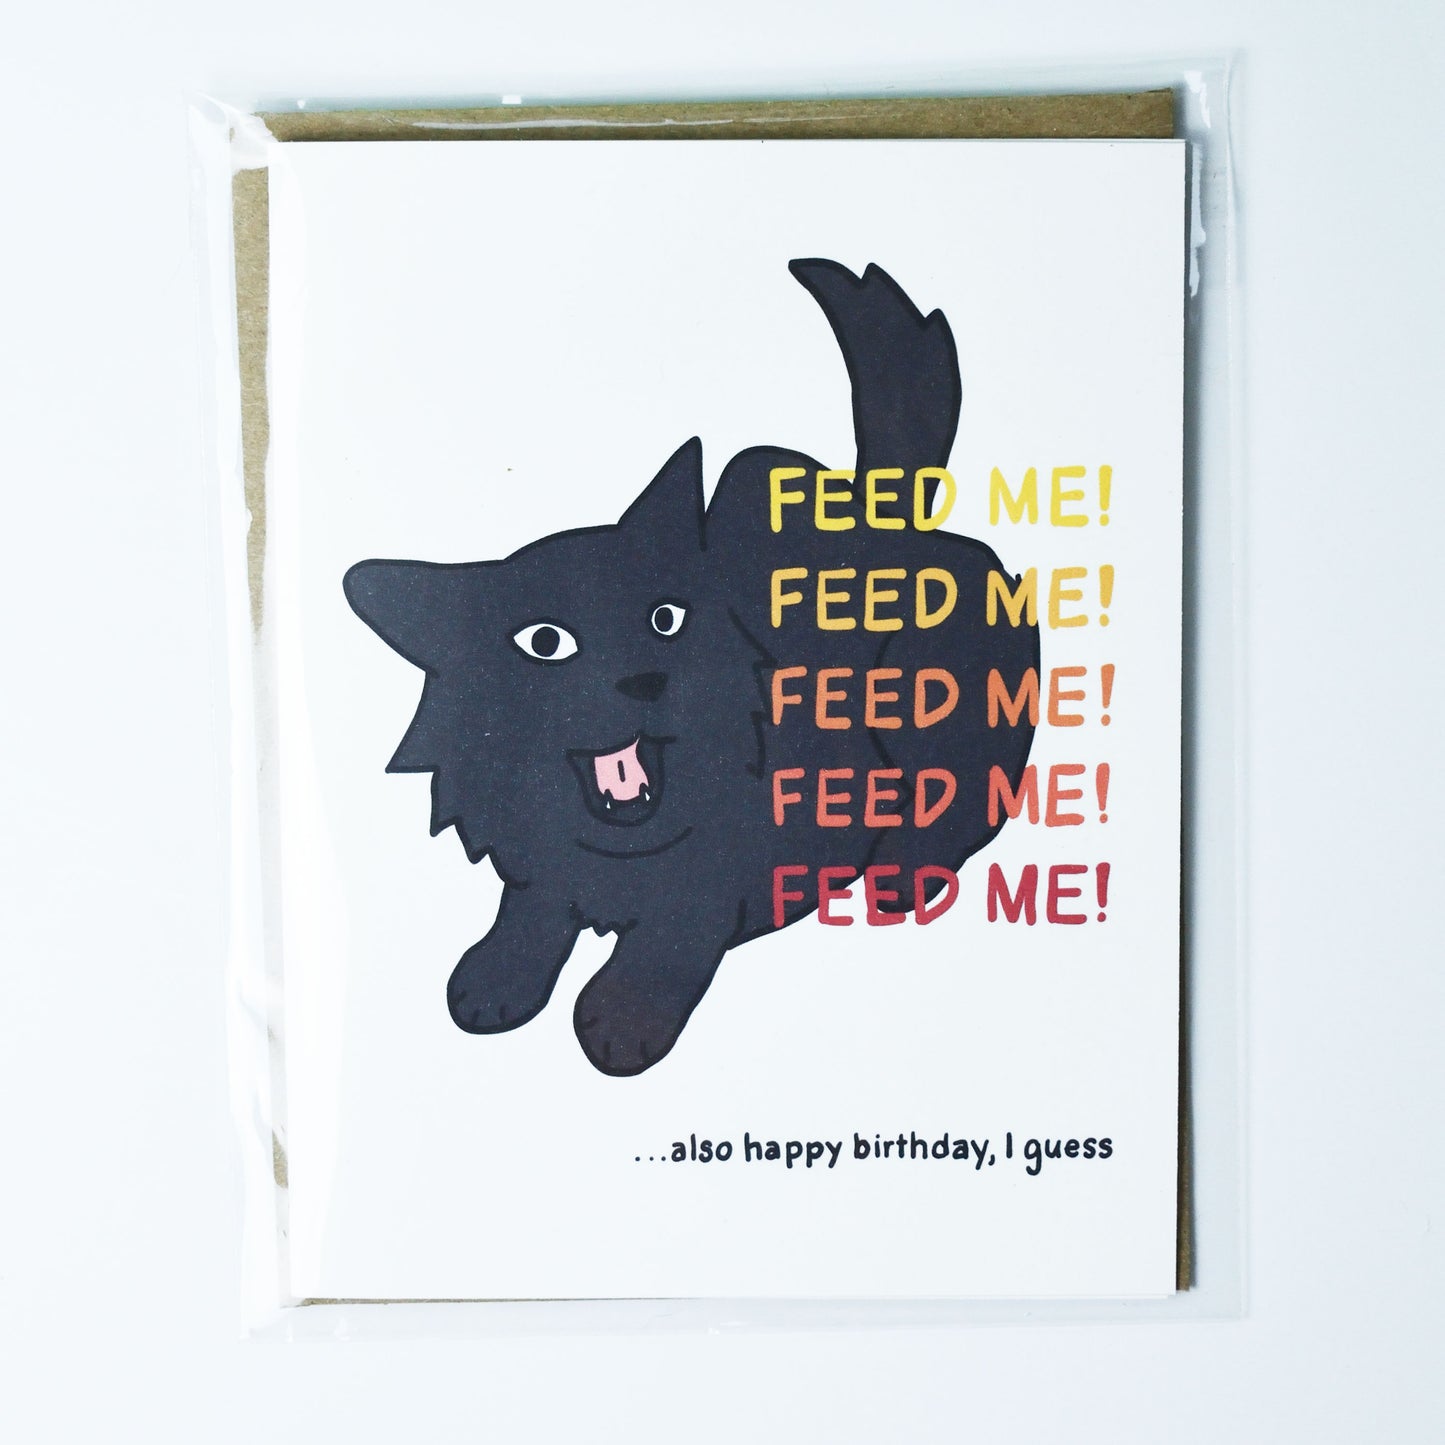 "Feed Me!" Cat Birthday Card